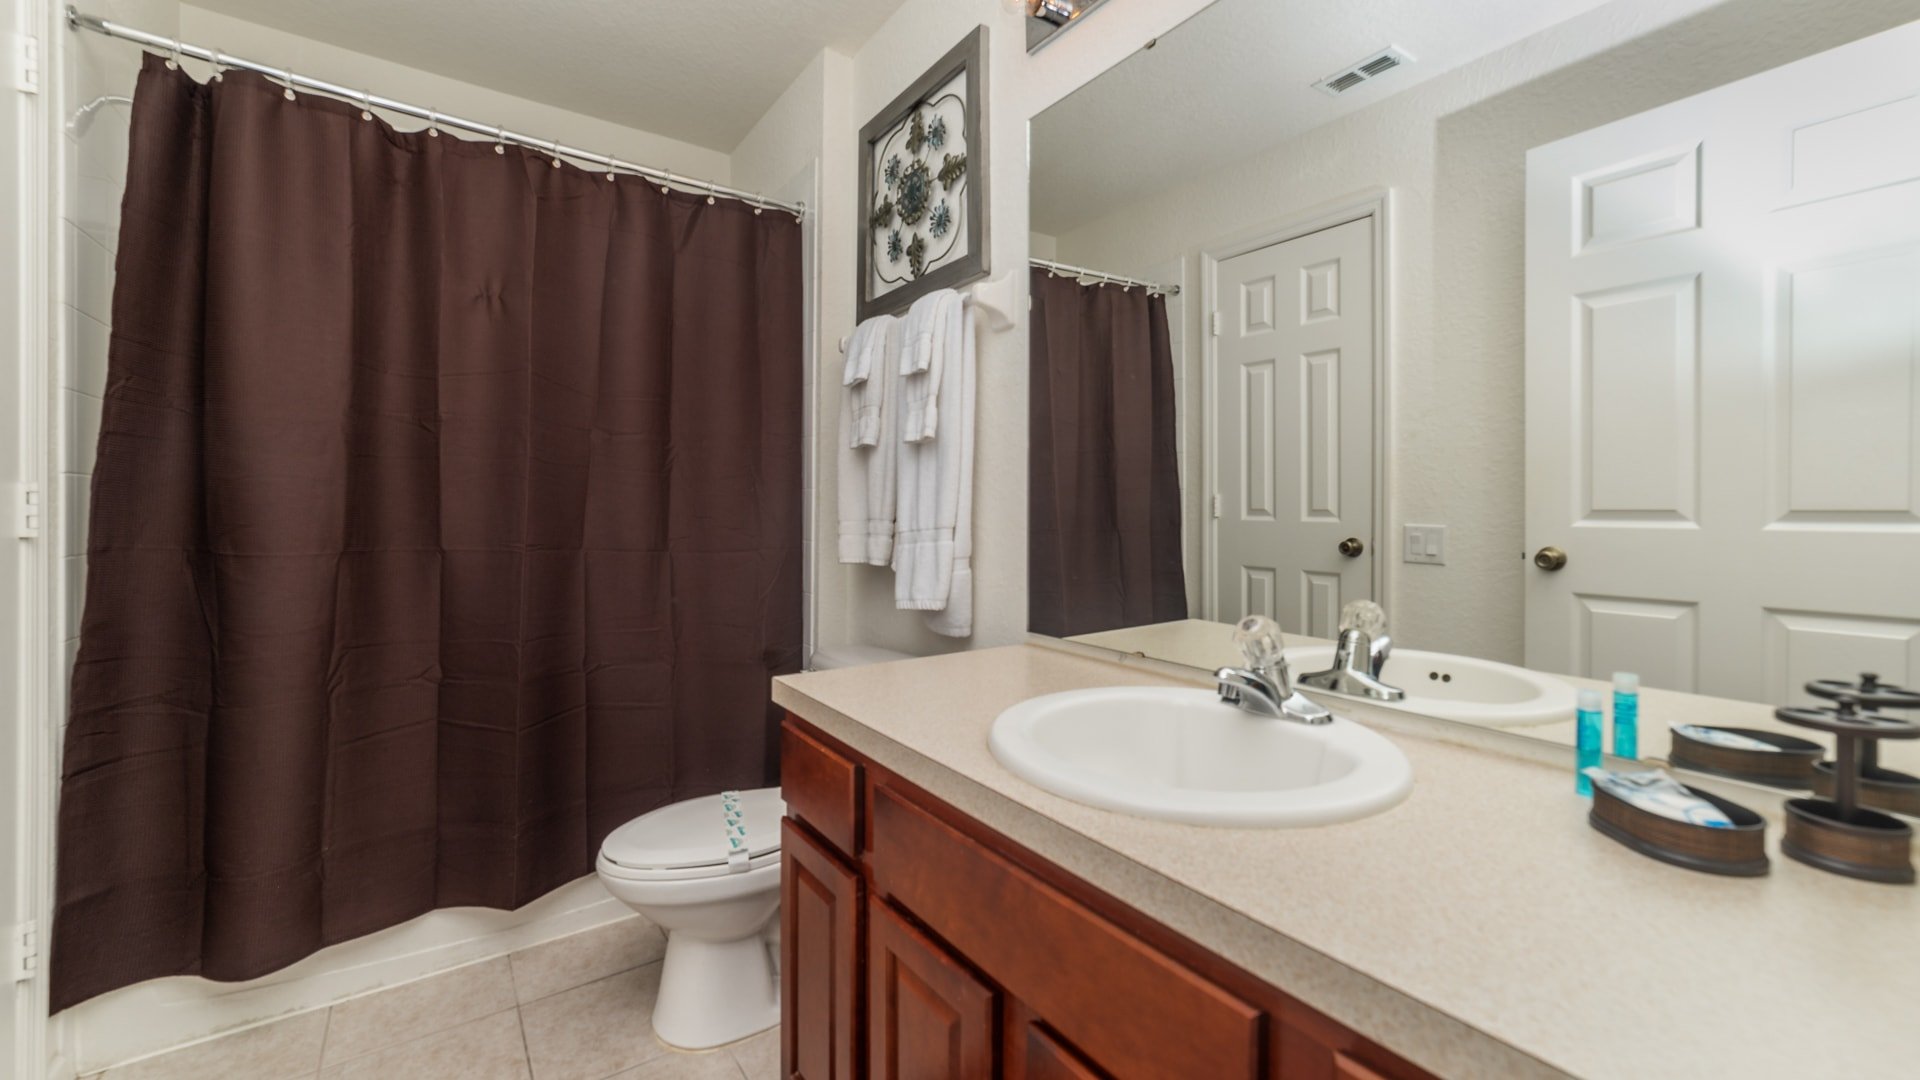 Queen Suite Bathroom 3
Downstairs
Tub/Shower Combo